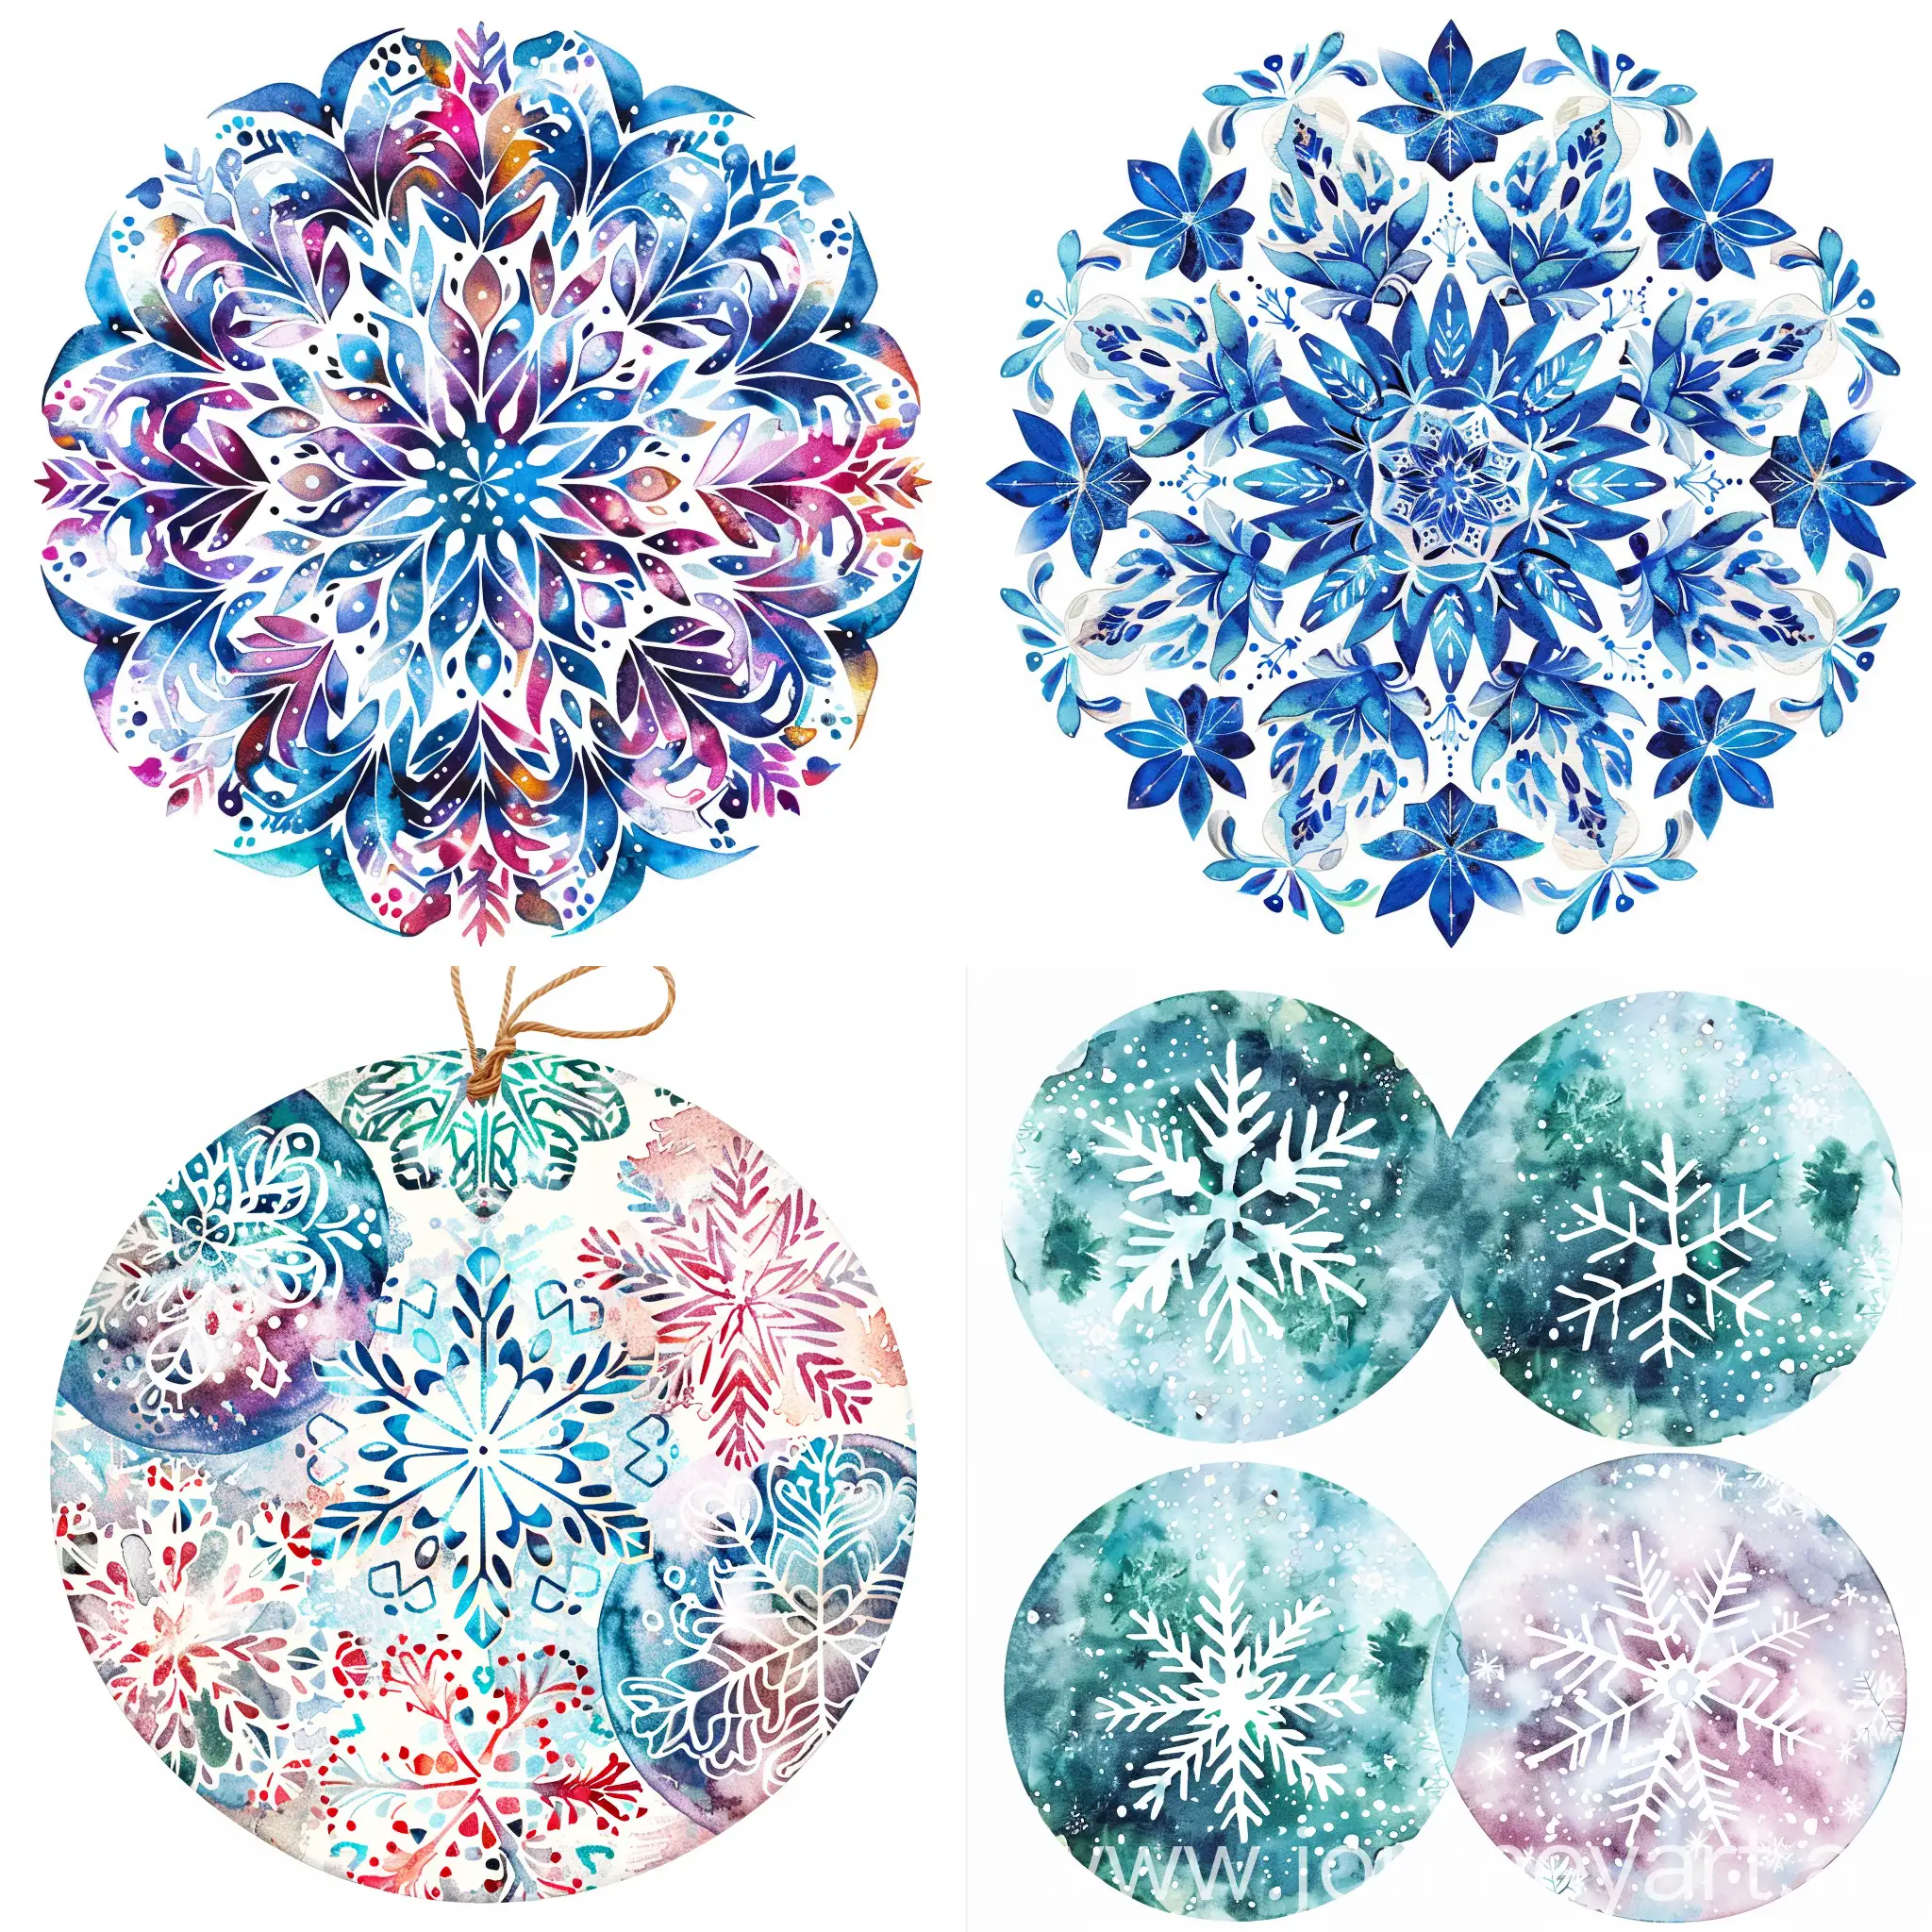 Winter-Wonderland-Symmetry-Snowflake-Ornaments-in-Vector-Watercolor-Style